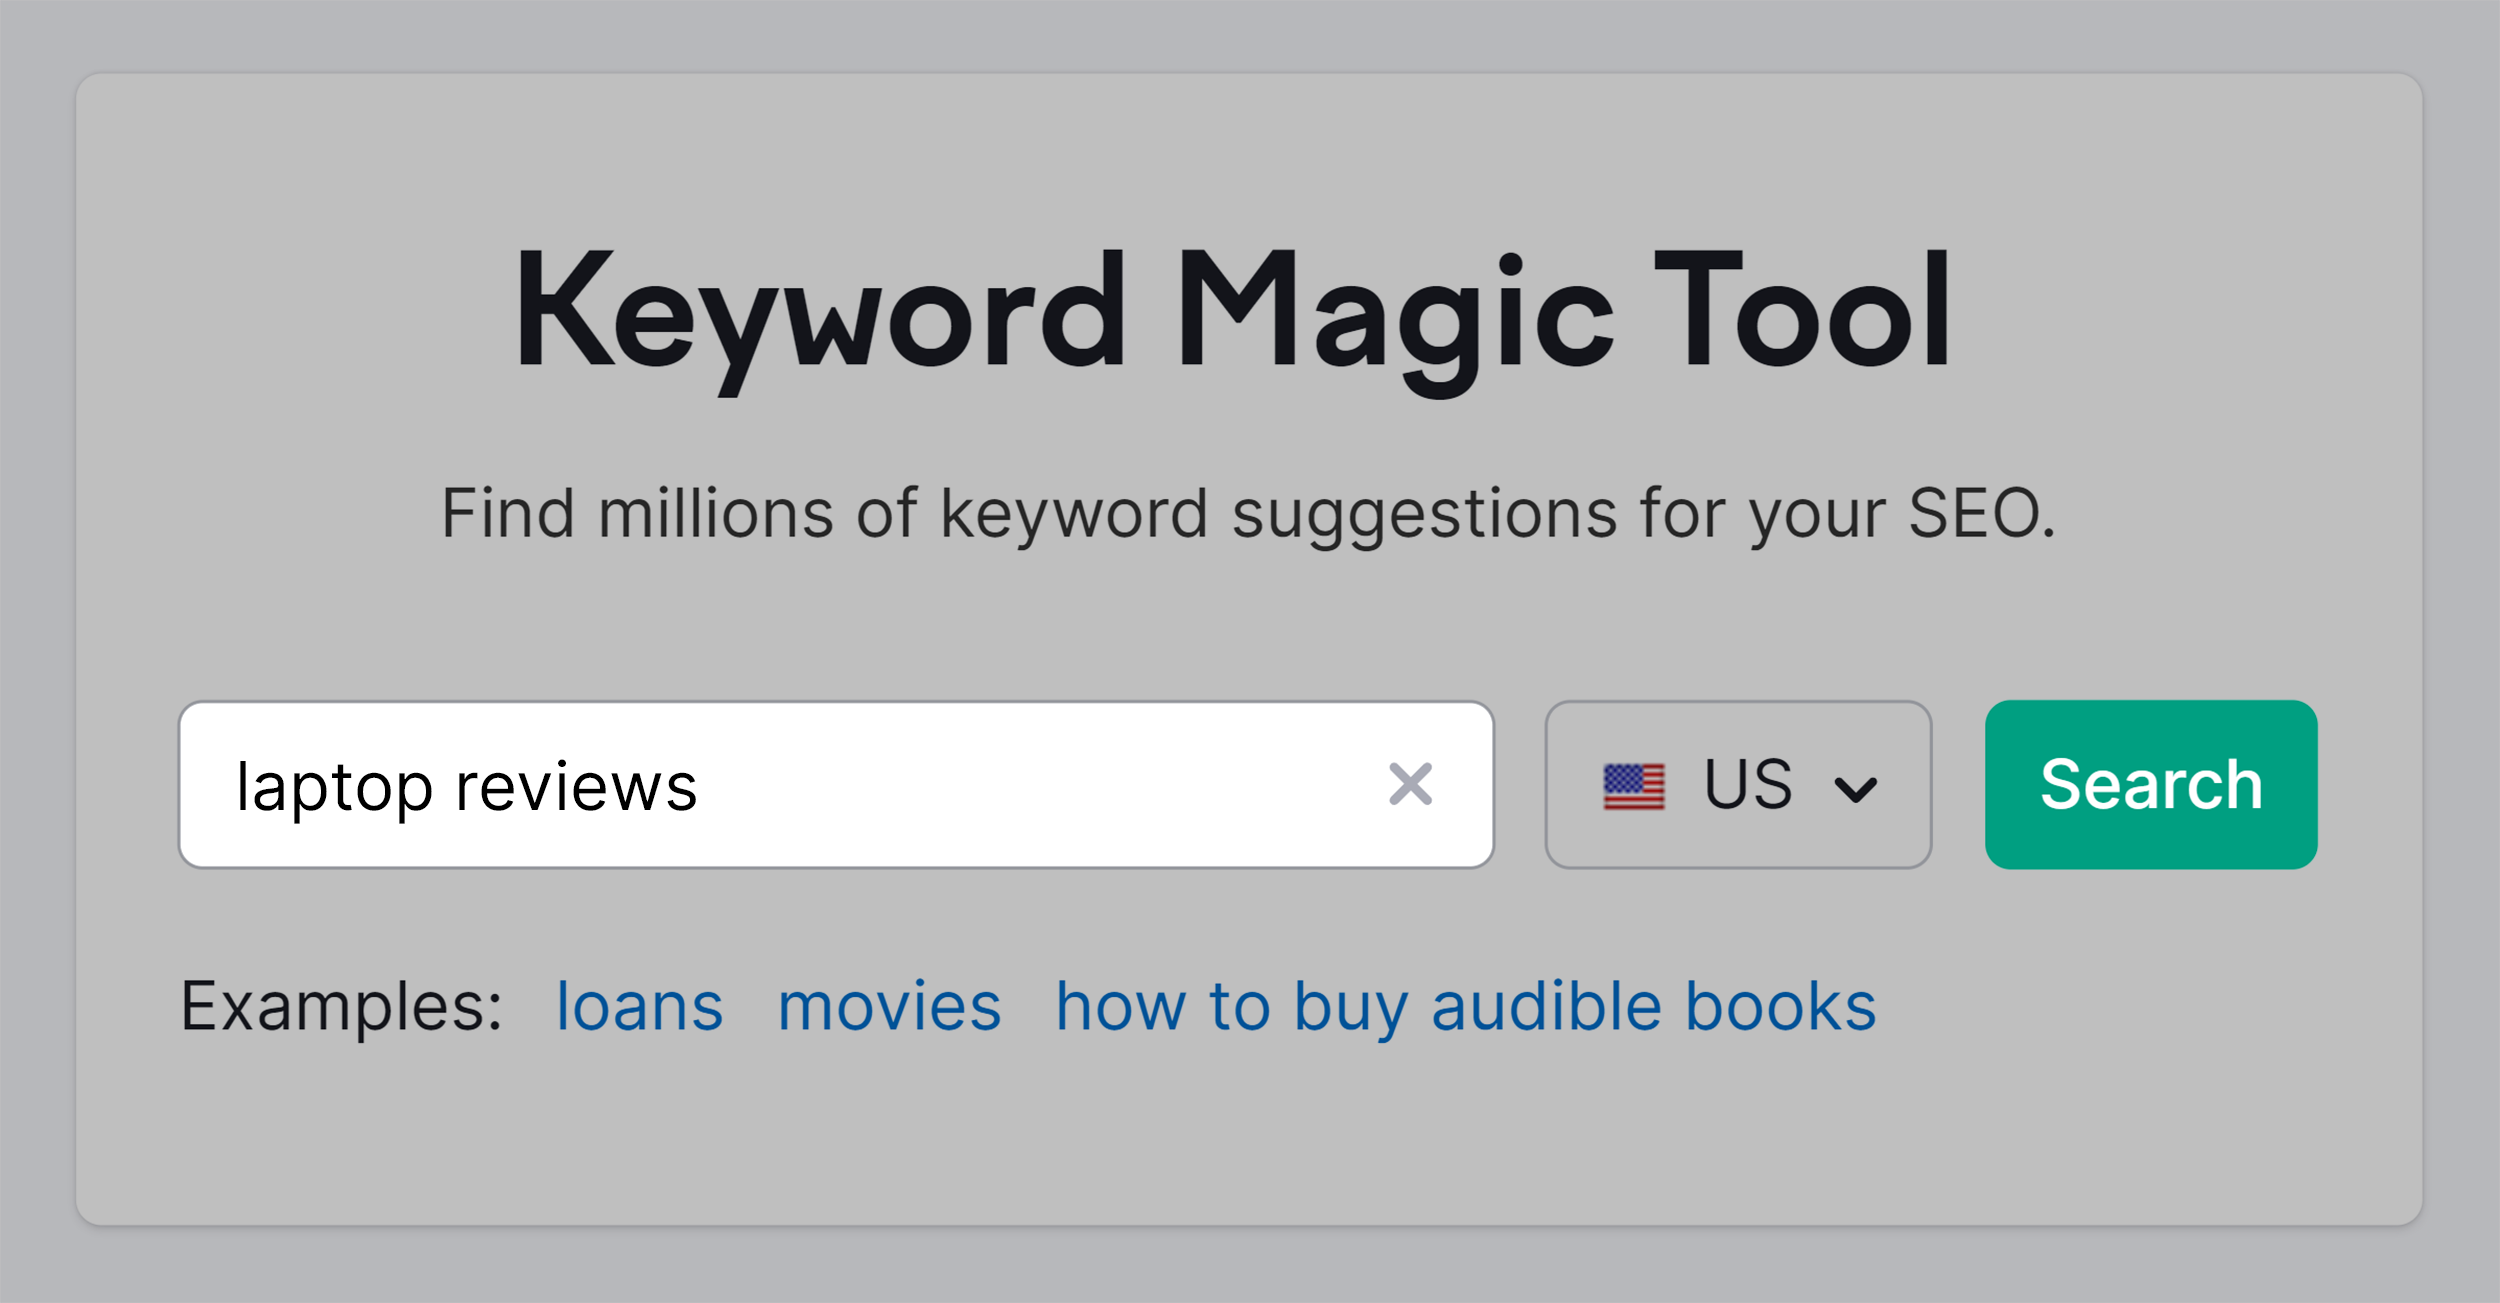 Keyword Magic Tool – Search – Laptop reviews